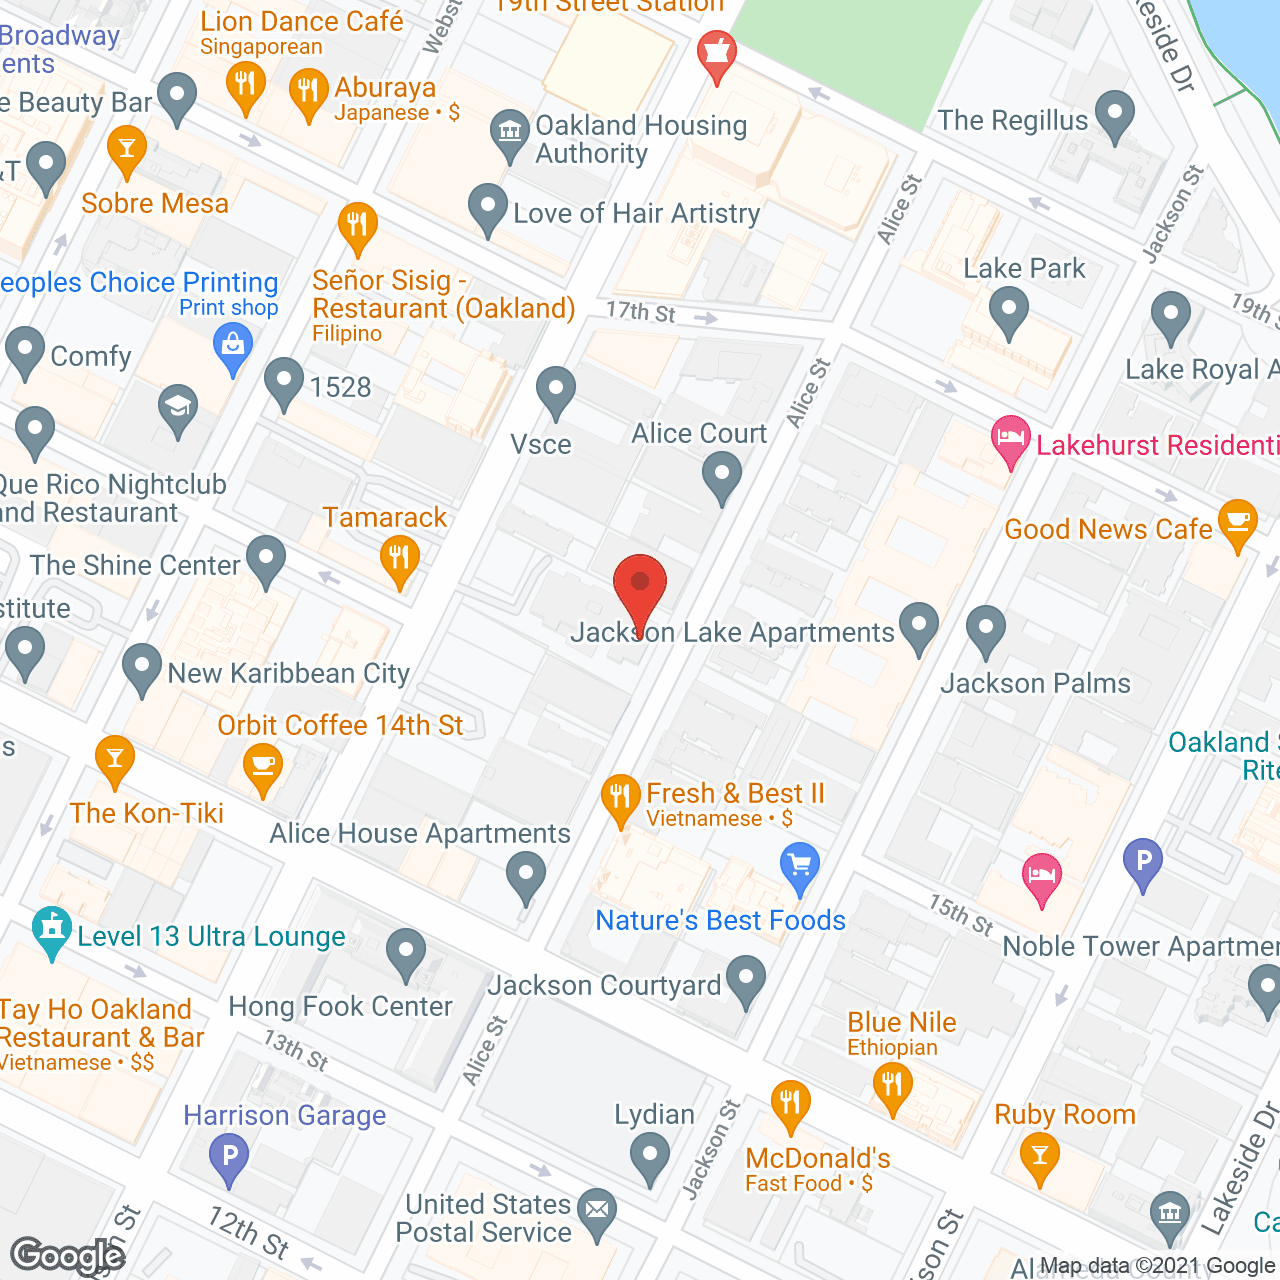 Southlake Tower in google map